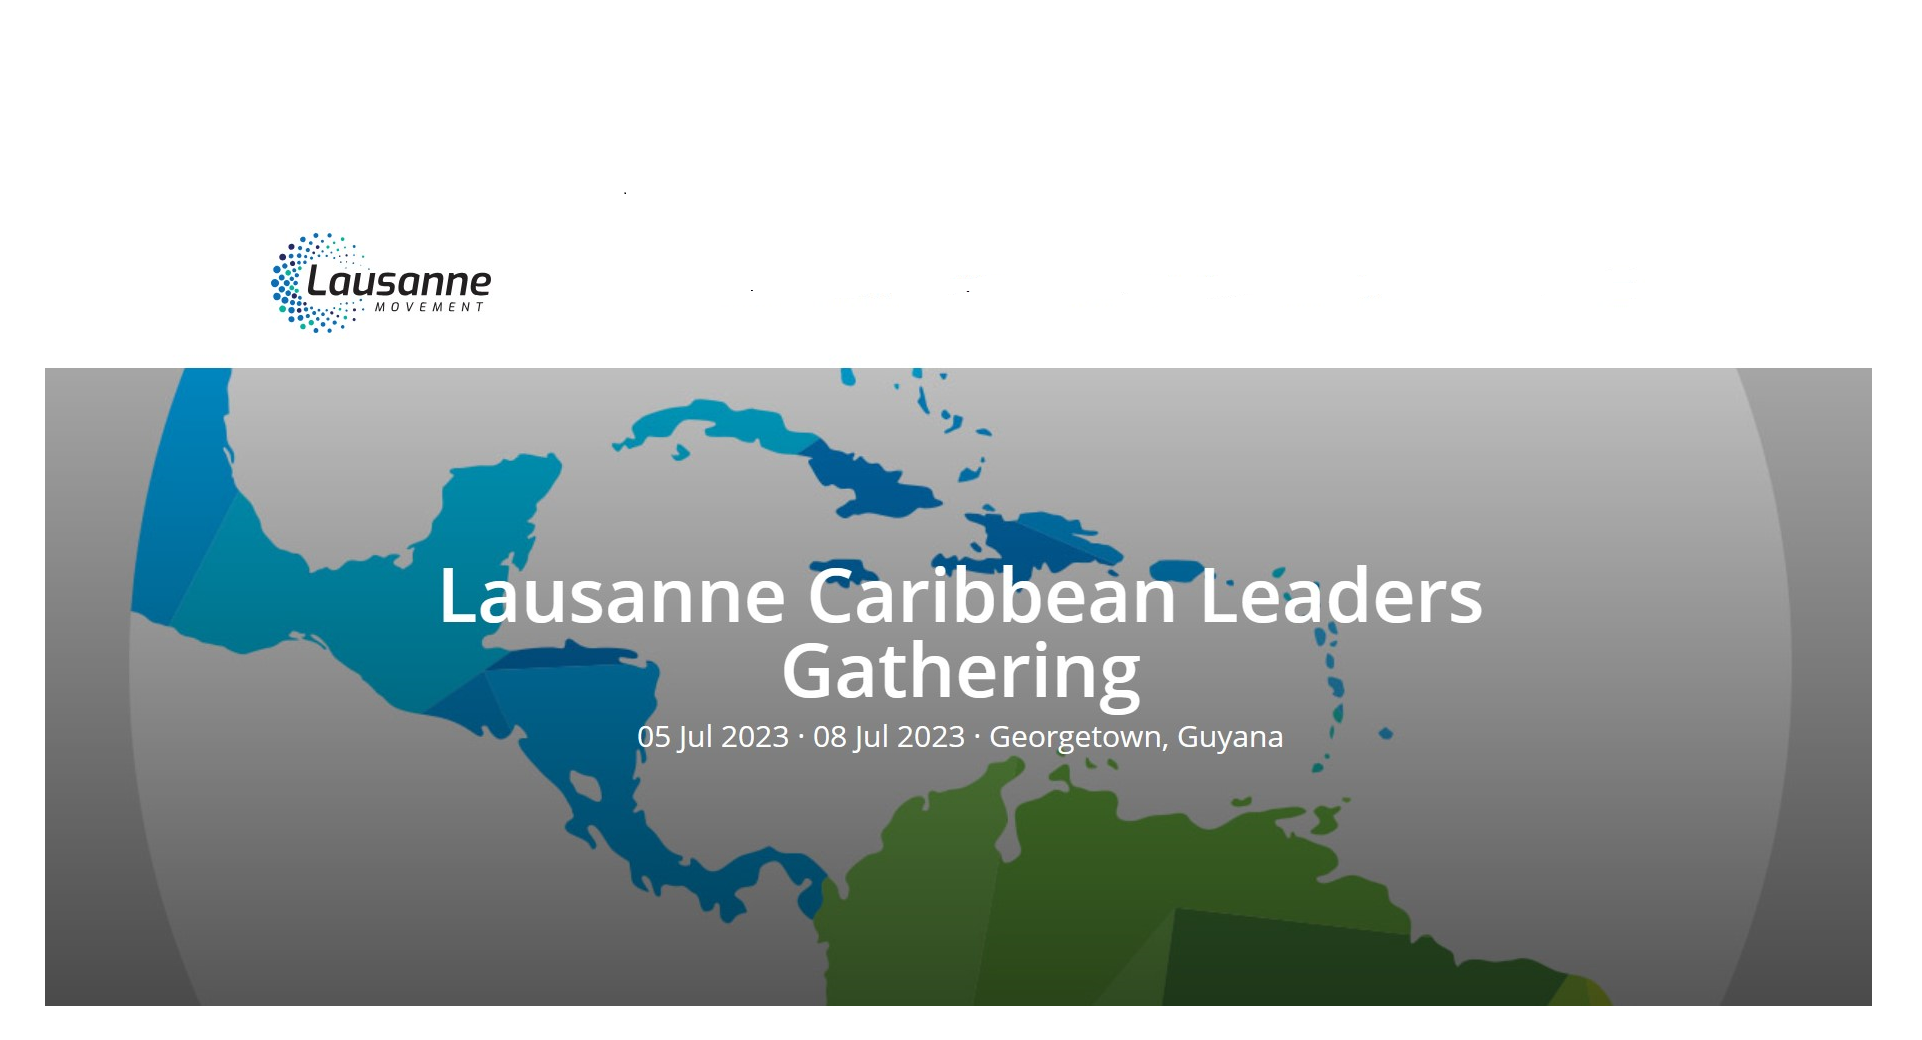 Lausanne Caribbean Leaders Gathering - July 5-8, 2023